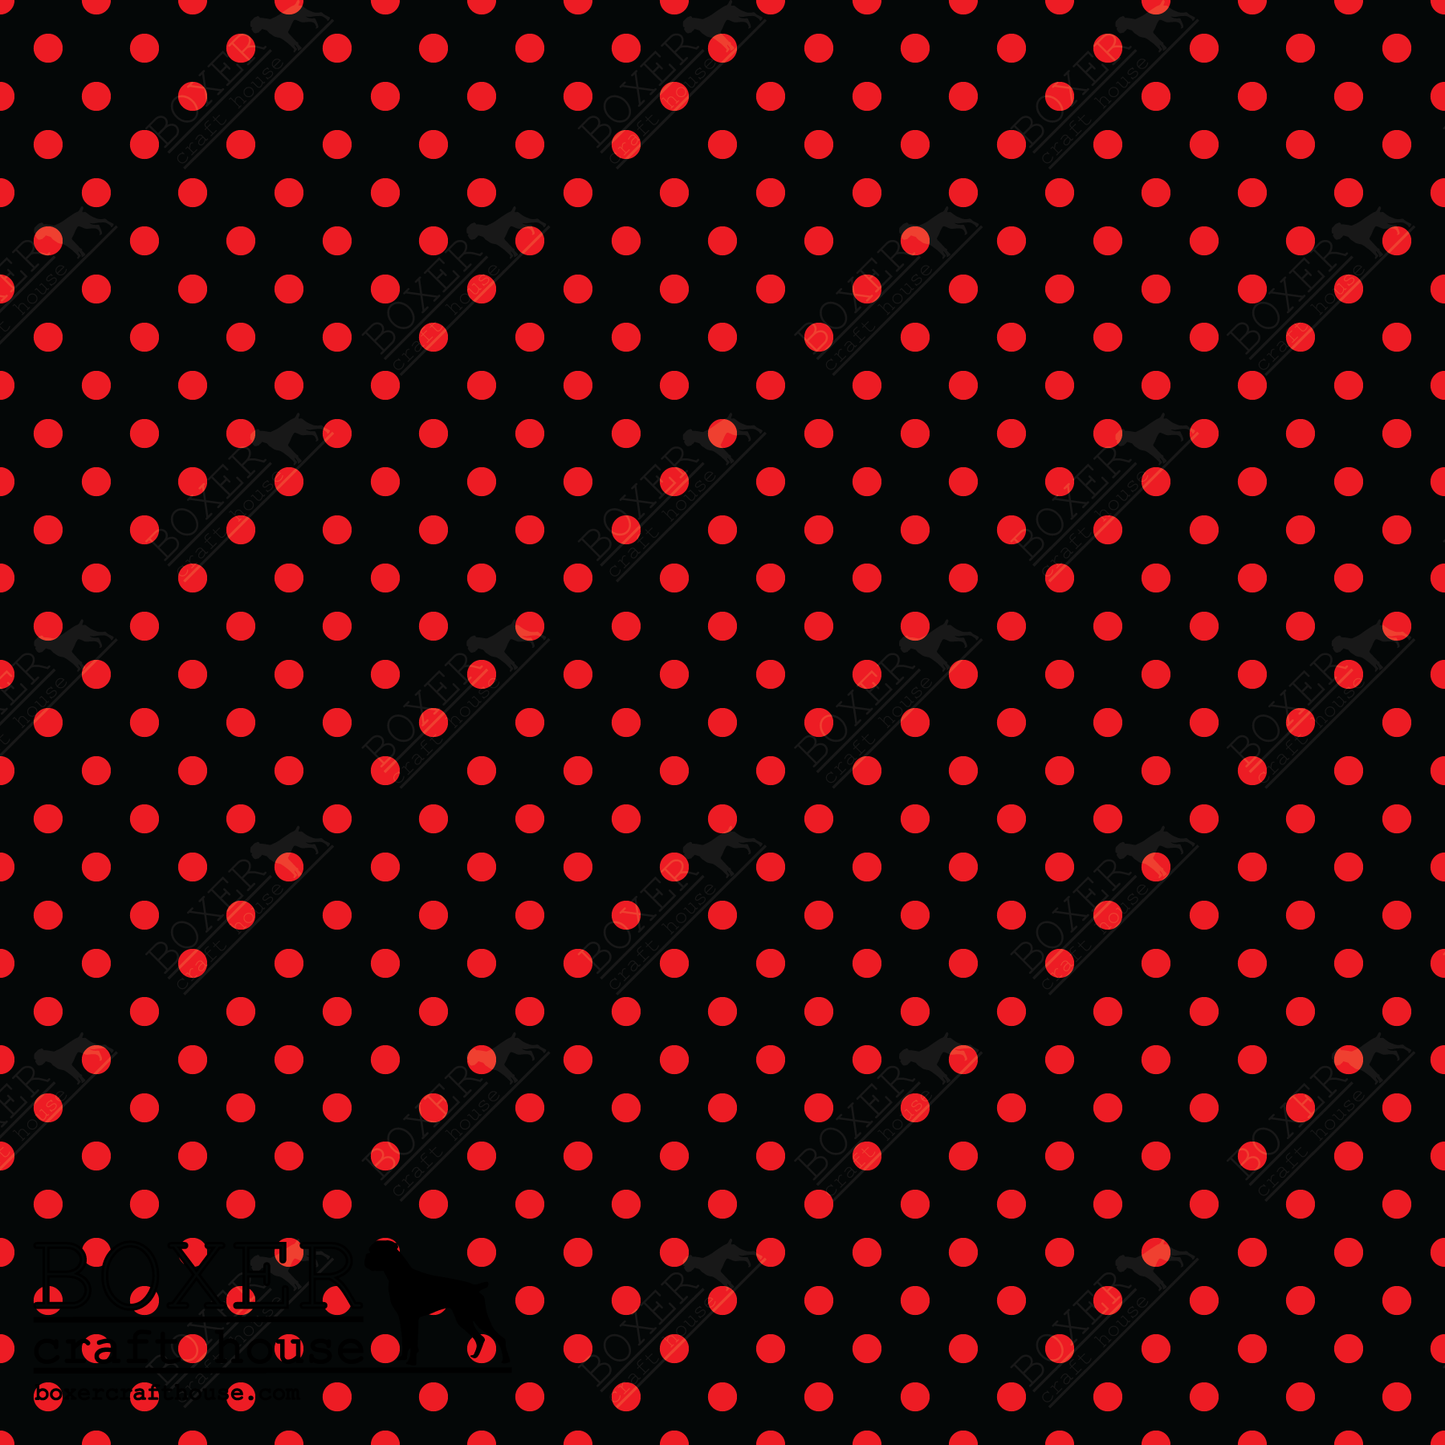 HTV Patterns - Valentine Hearts - Dots Four